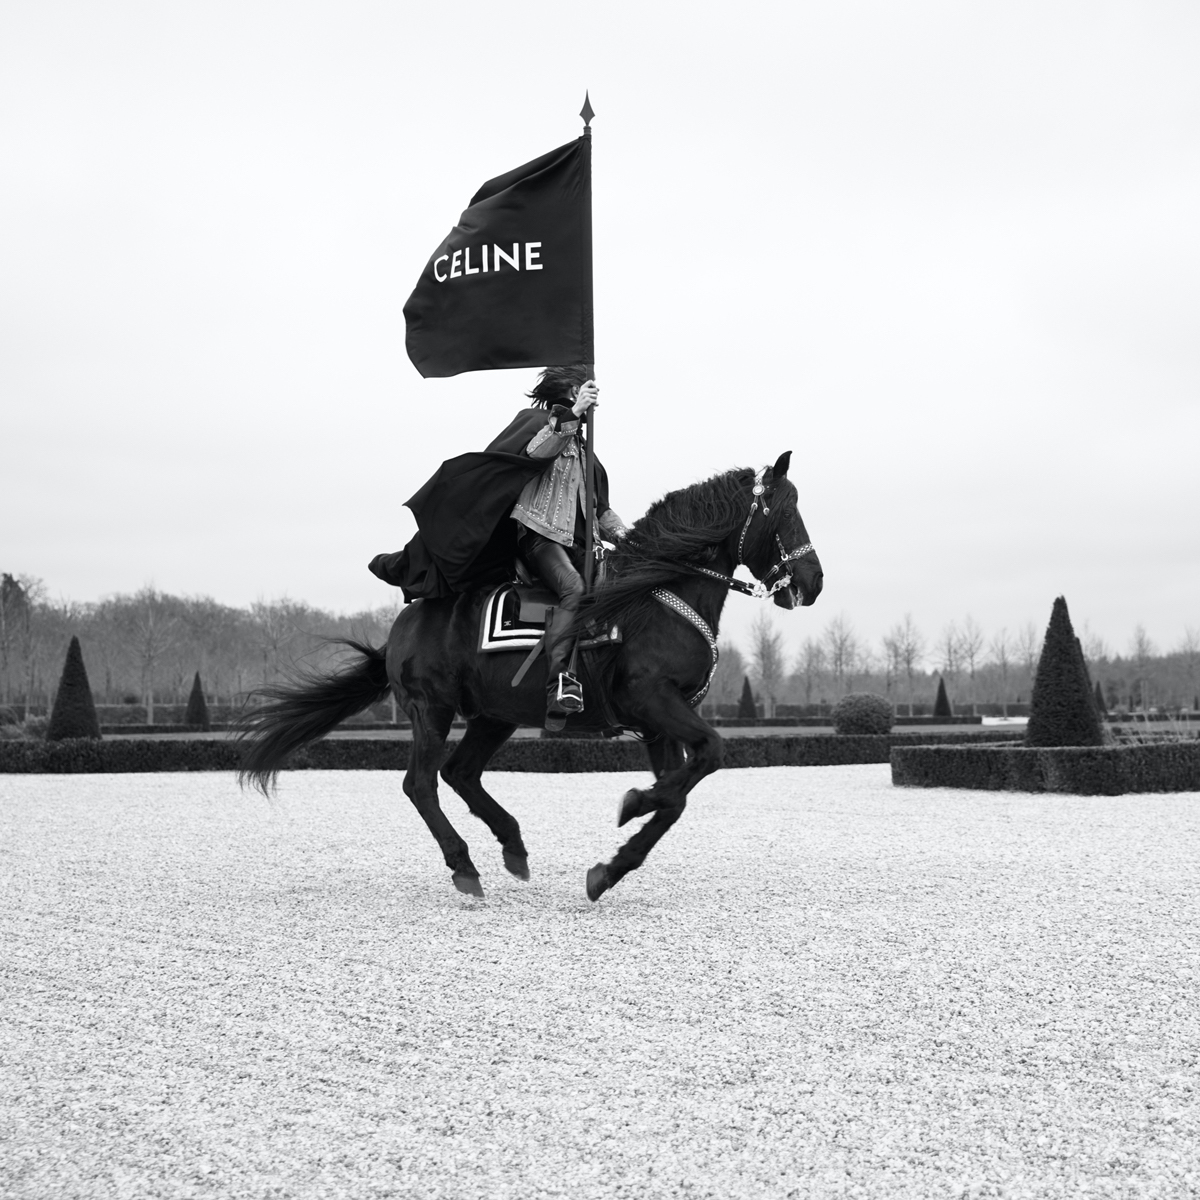 Celine Homme Autumn/Winter 2021 Collection Preview & Short Film